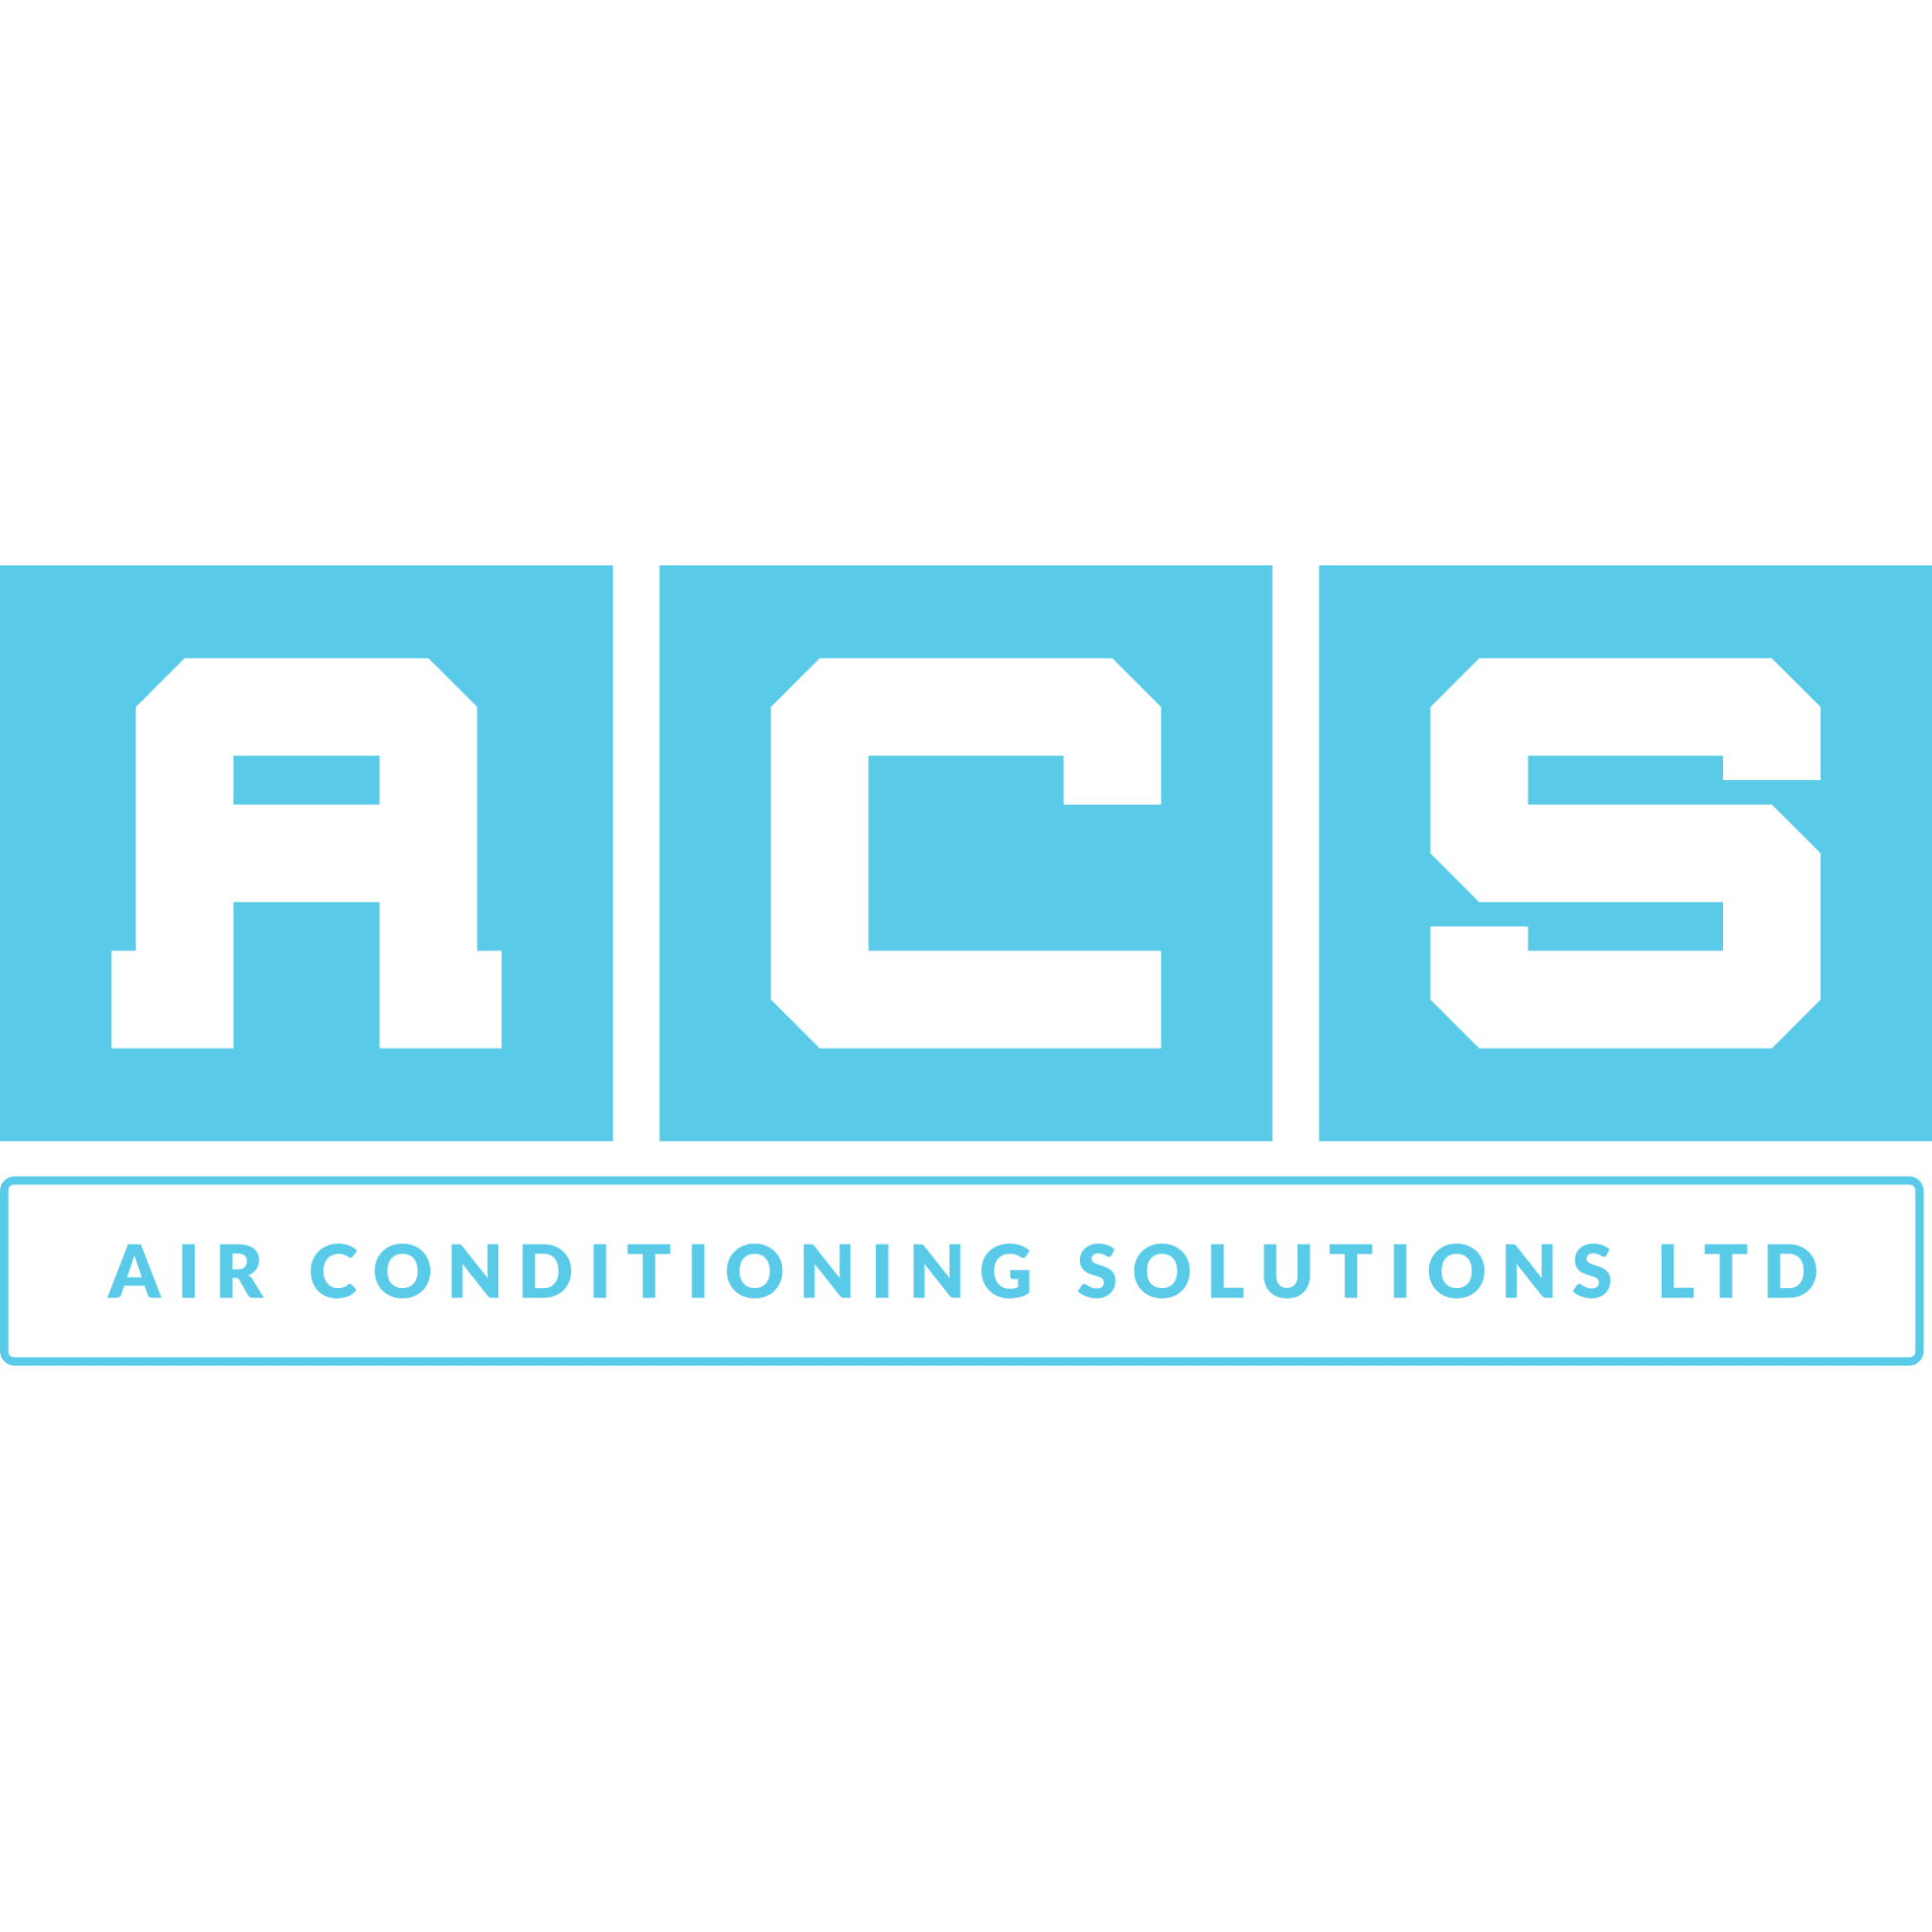 LOGO Air Conditioning Solutions Ltd Bolton 01612 412385